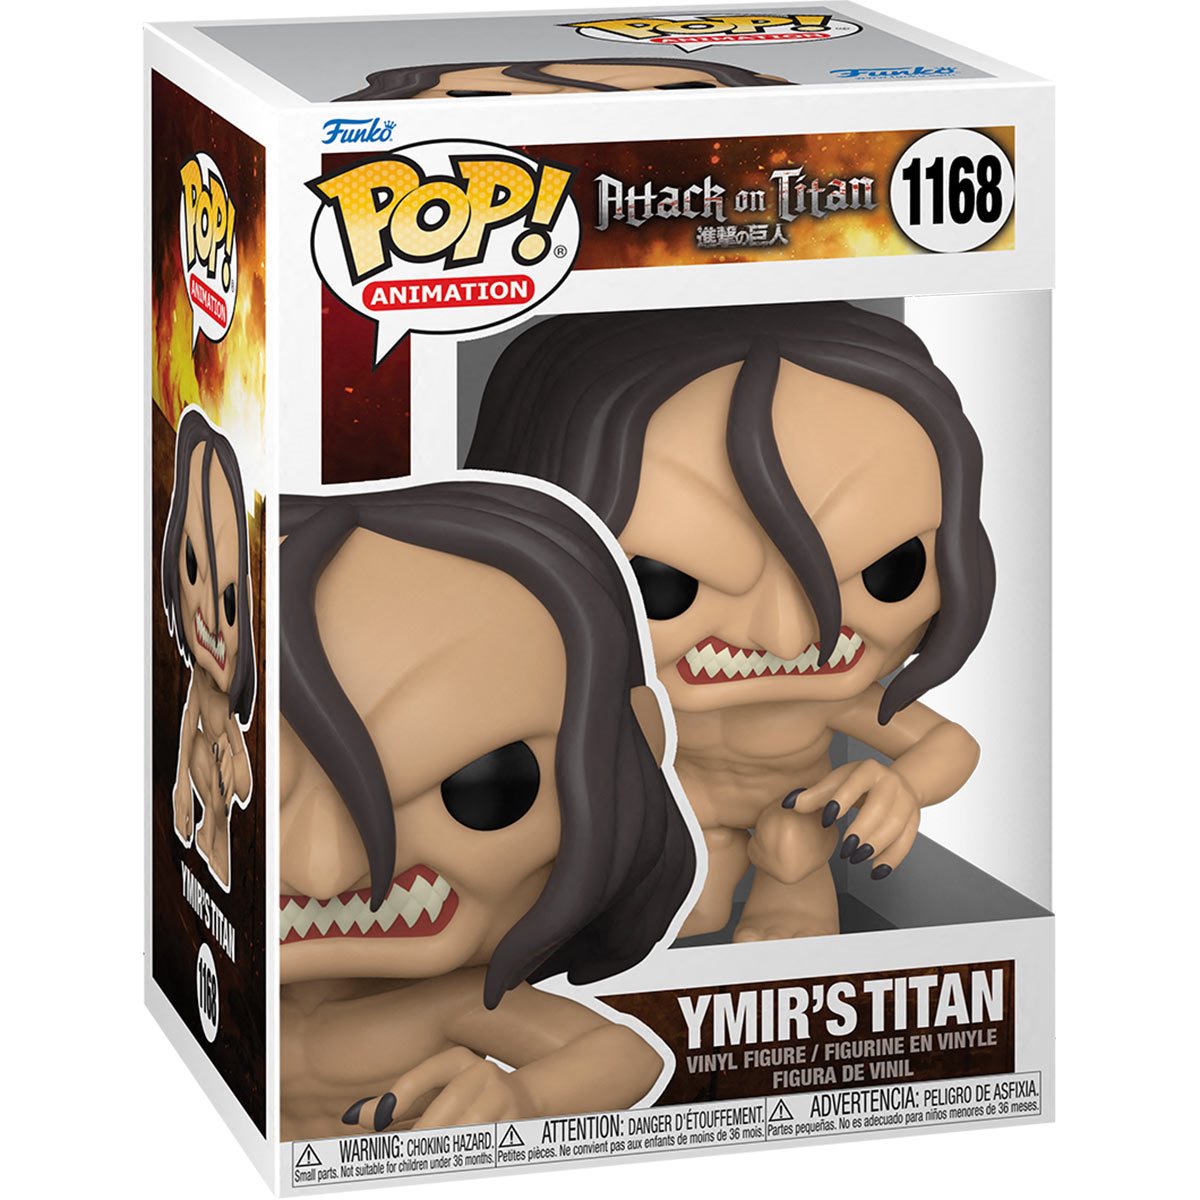 Attack on Titan Ymir's Titan Funko Pop! Vinyl Figure #1168